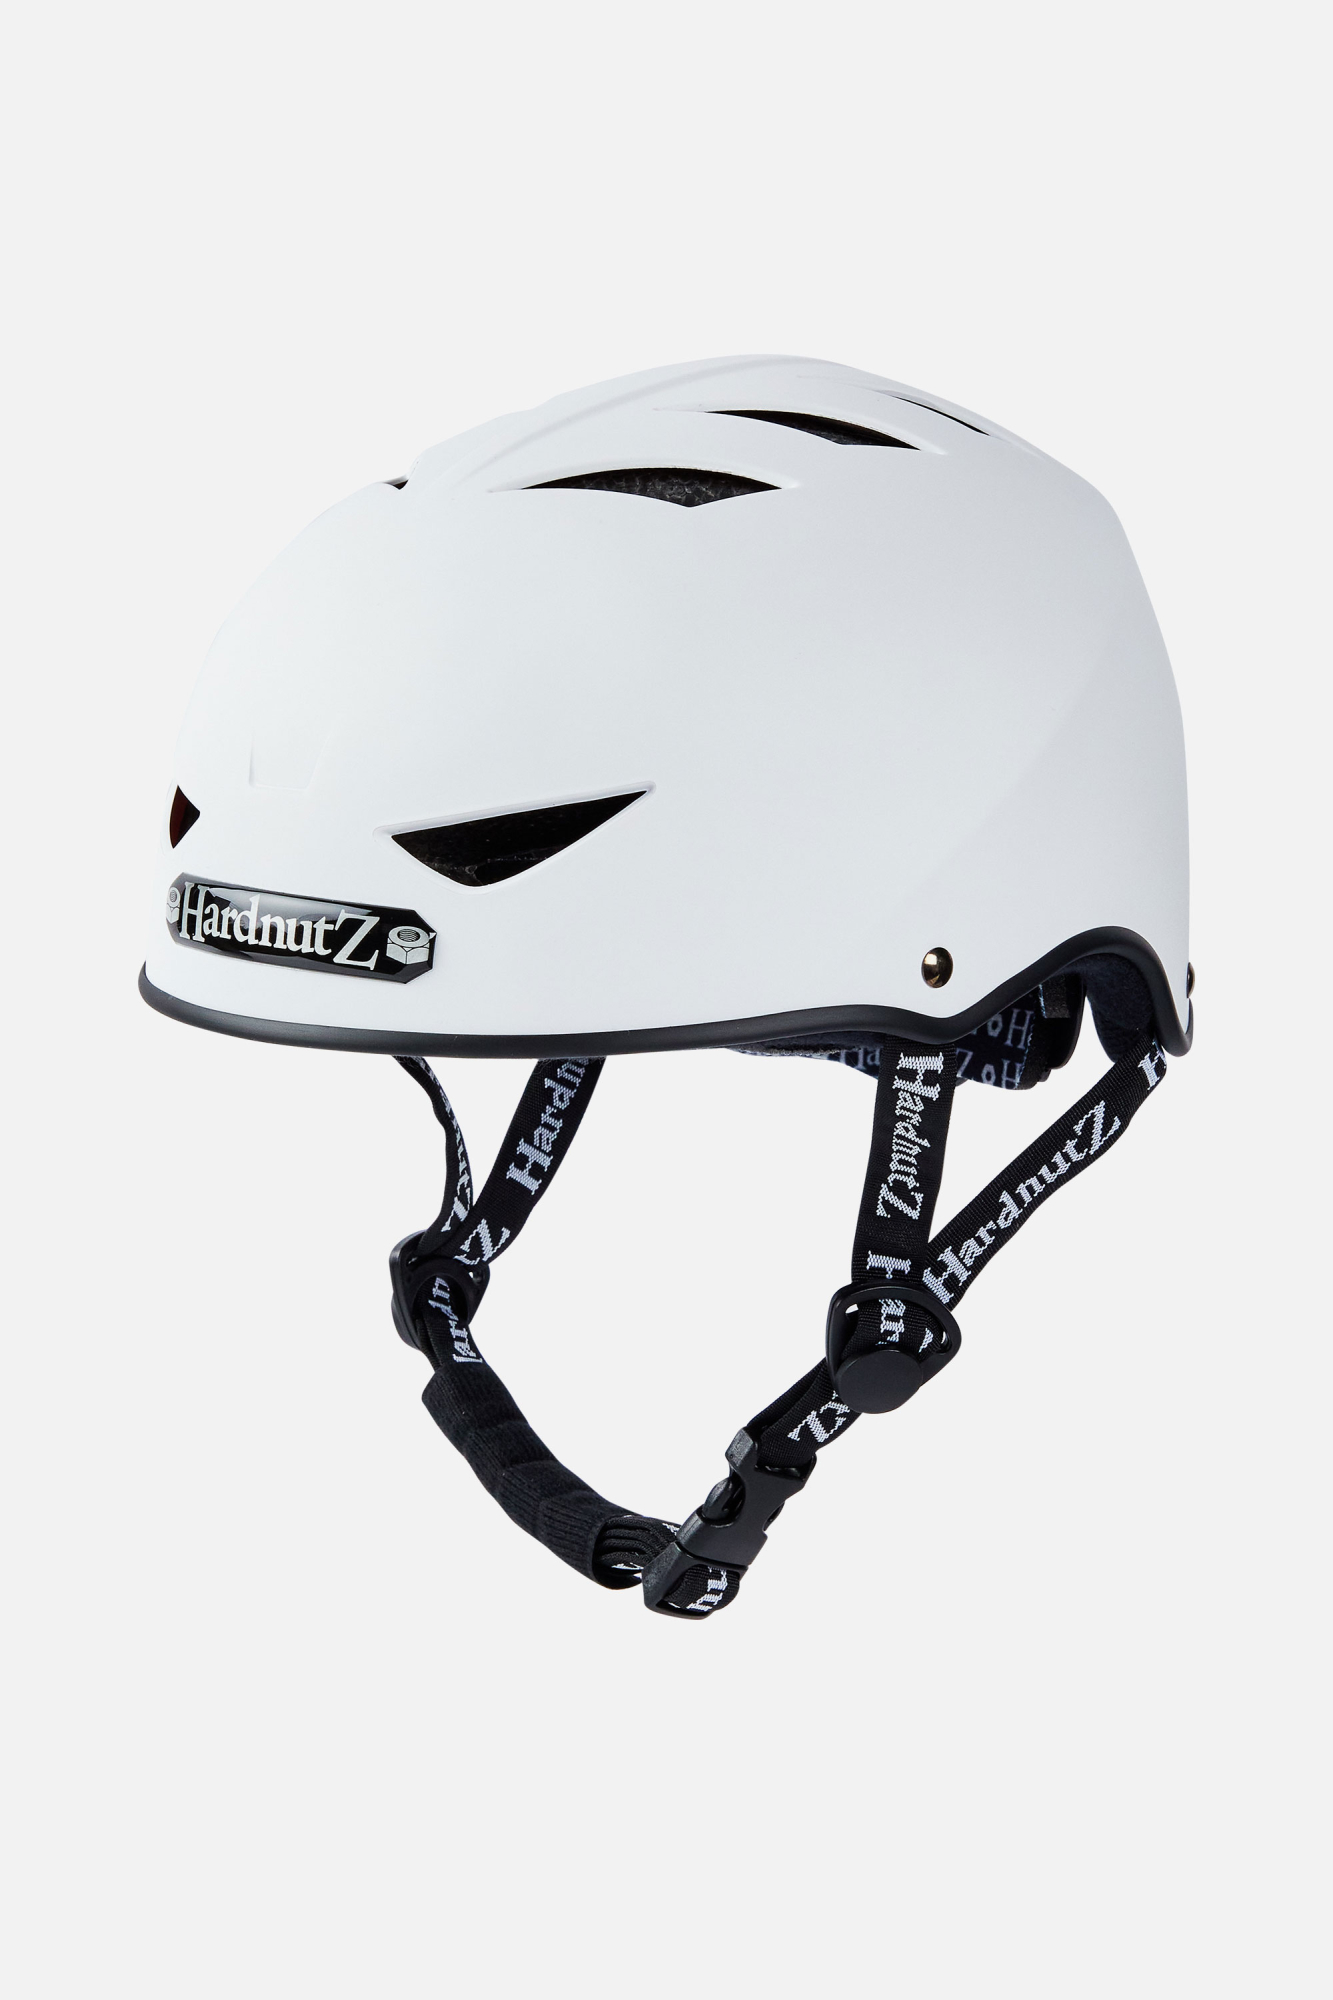 Hardnutz Unisex Street Helmet White - Size: Small